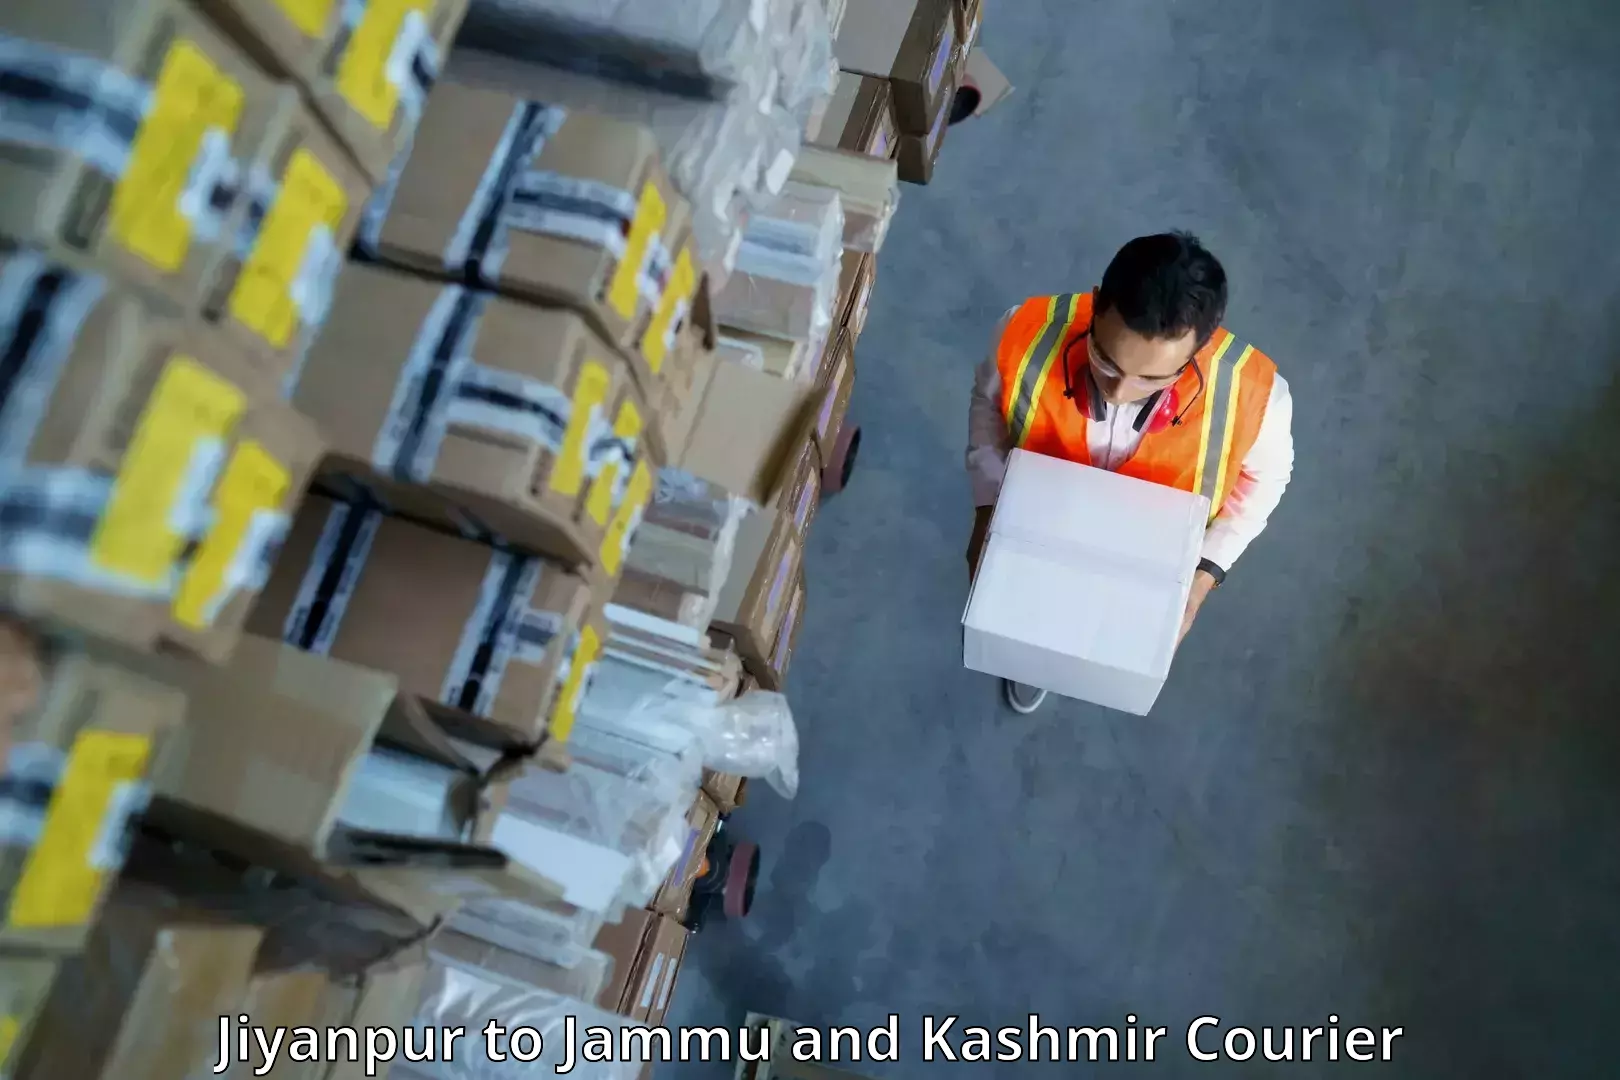 Professional courier services Jiyanpur to Srinagar Kashmir